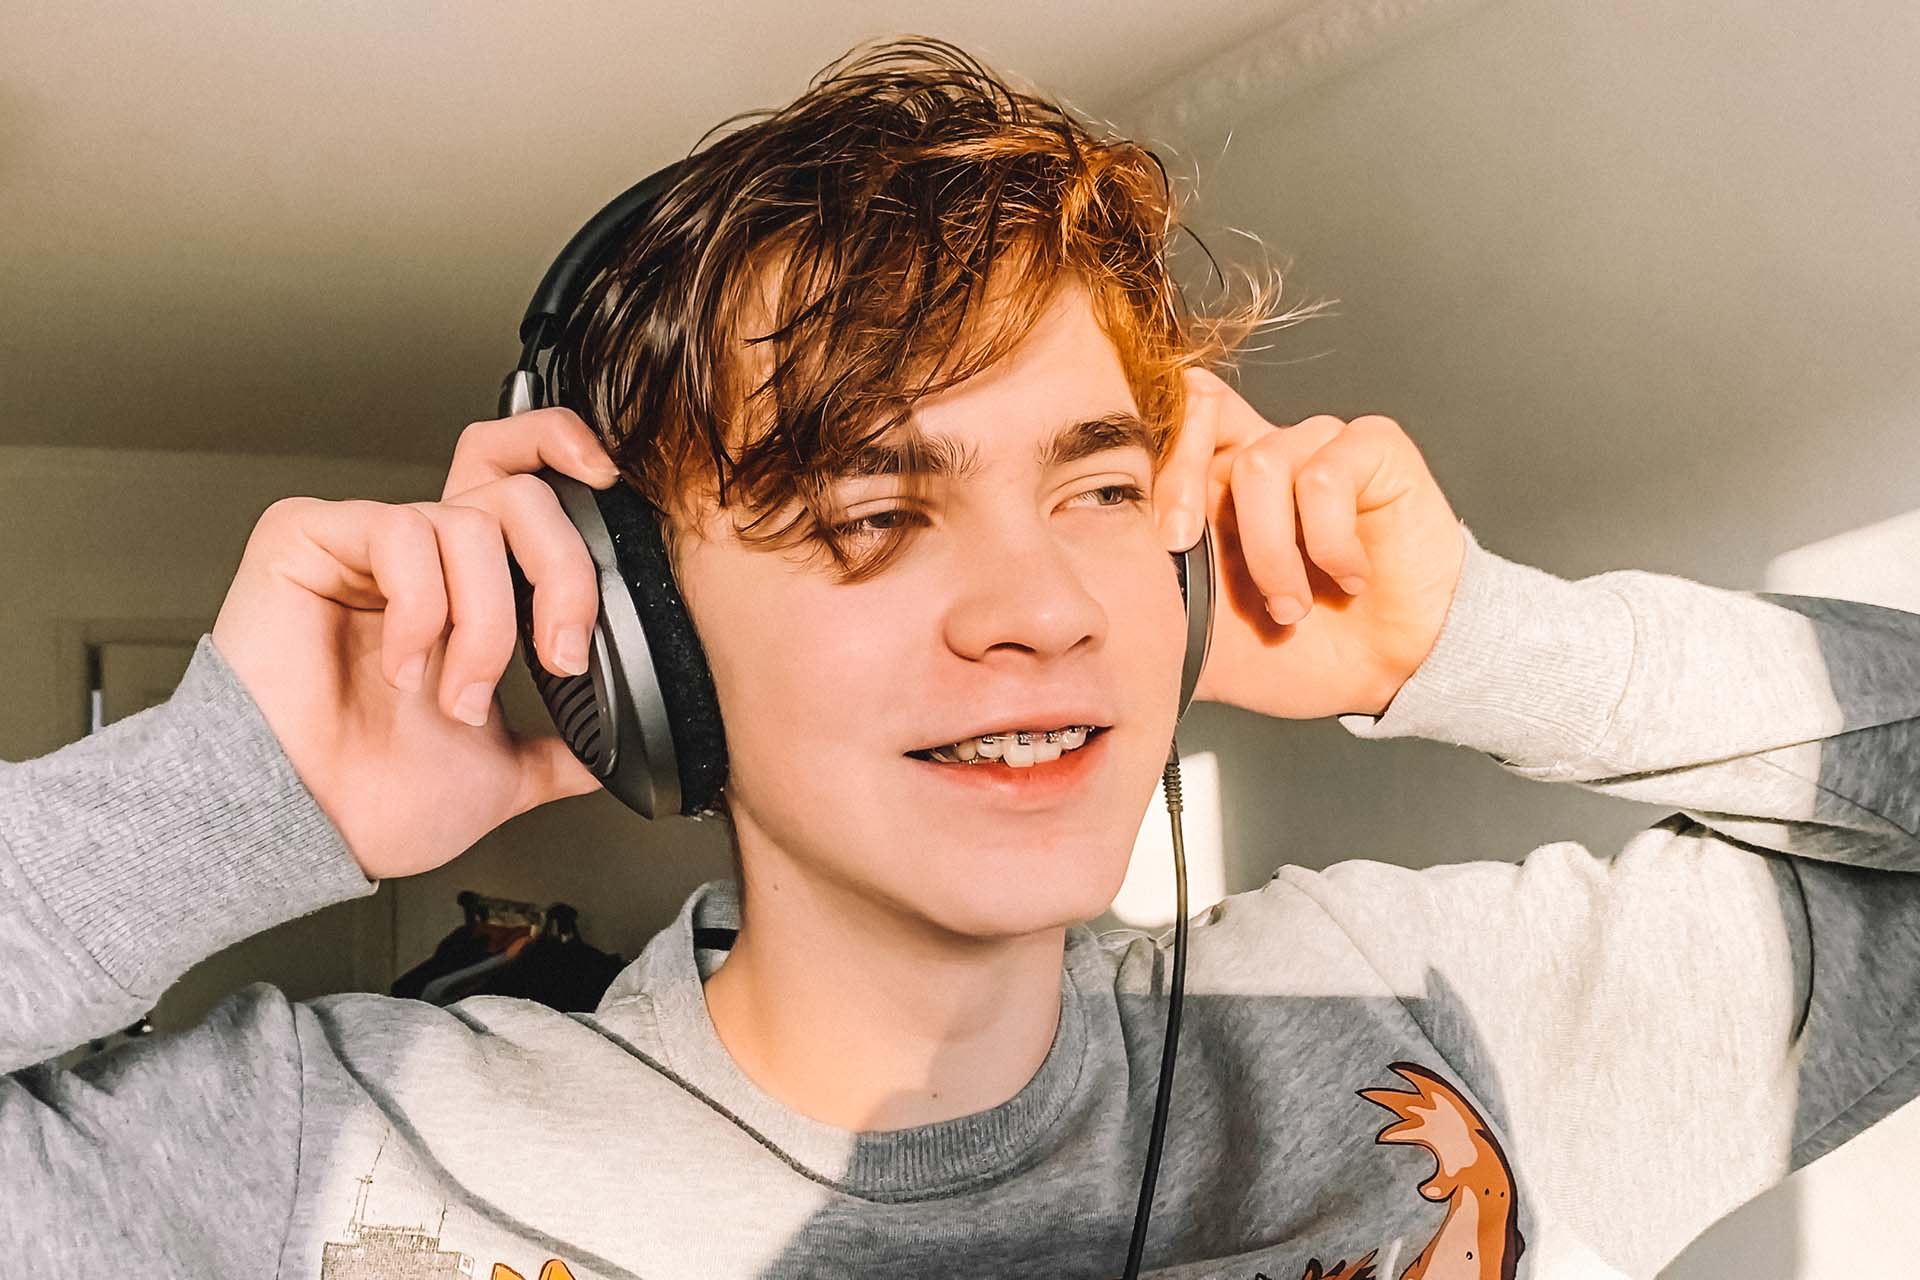 Teen boy with braces listens to music on headphones in Studio City, Los Angeles, CA